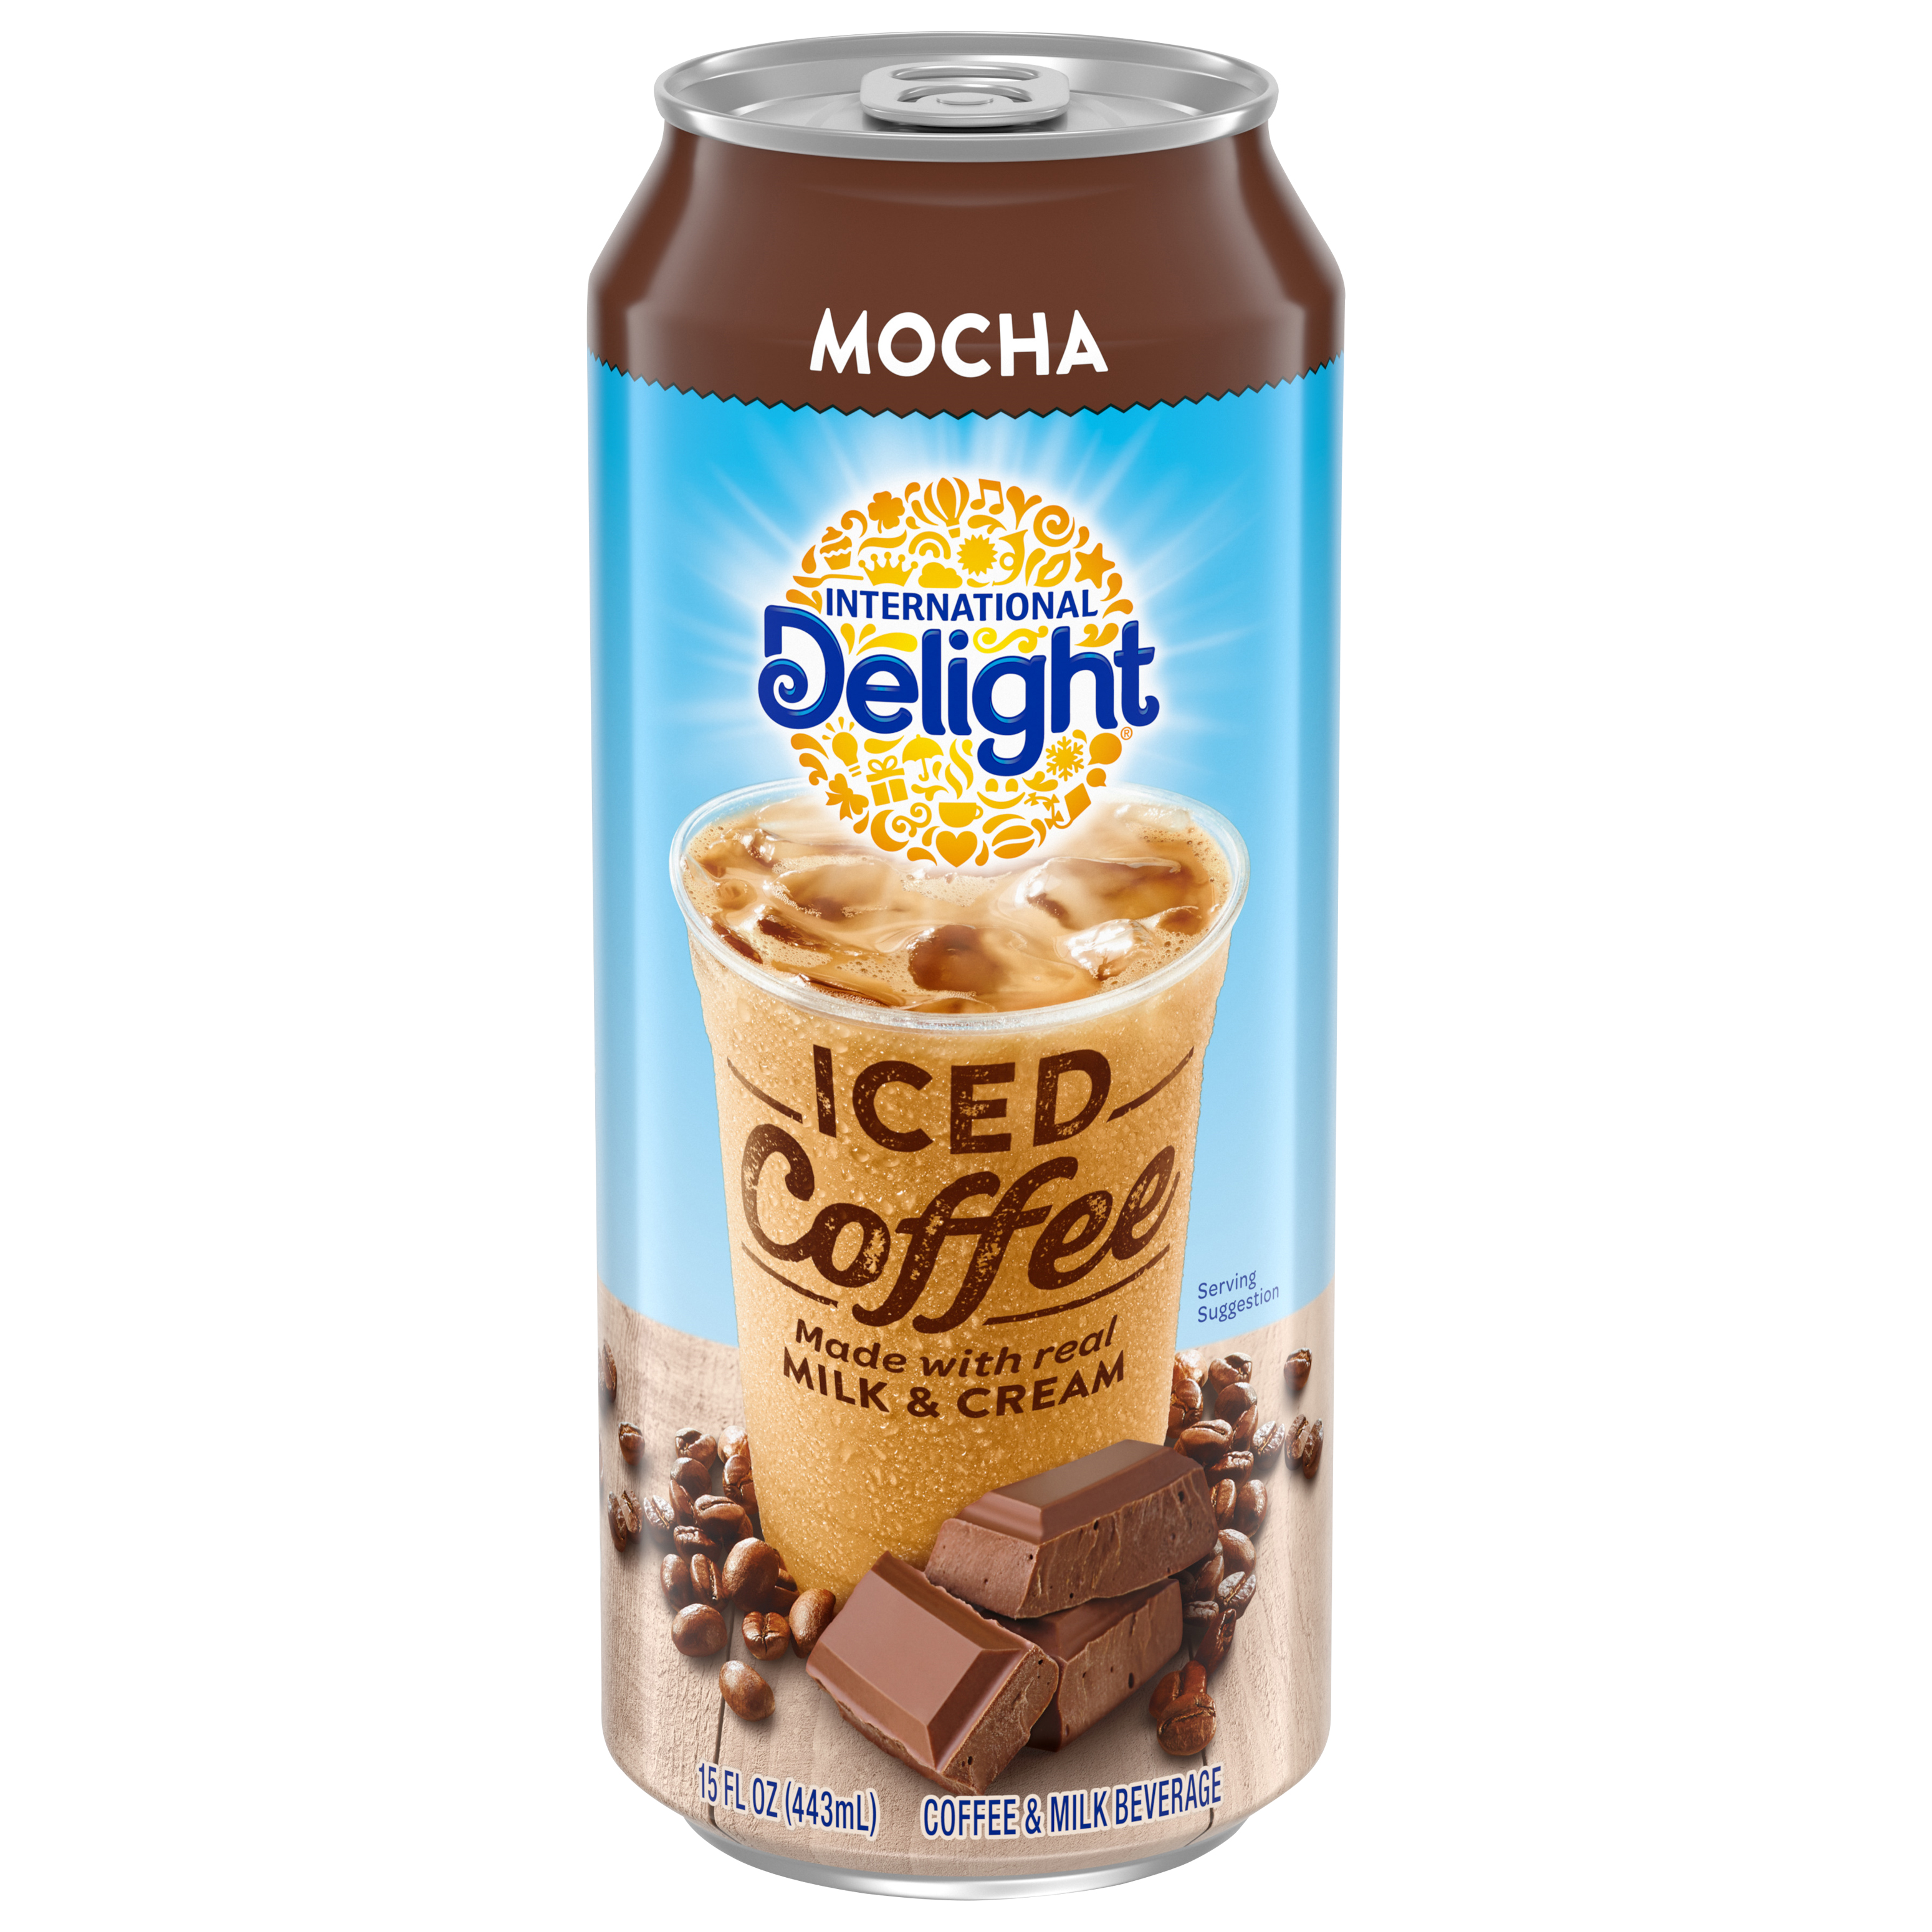 International Delight Iced Coffee, Mocha 12 units per case 15.0 fl